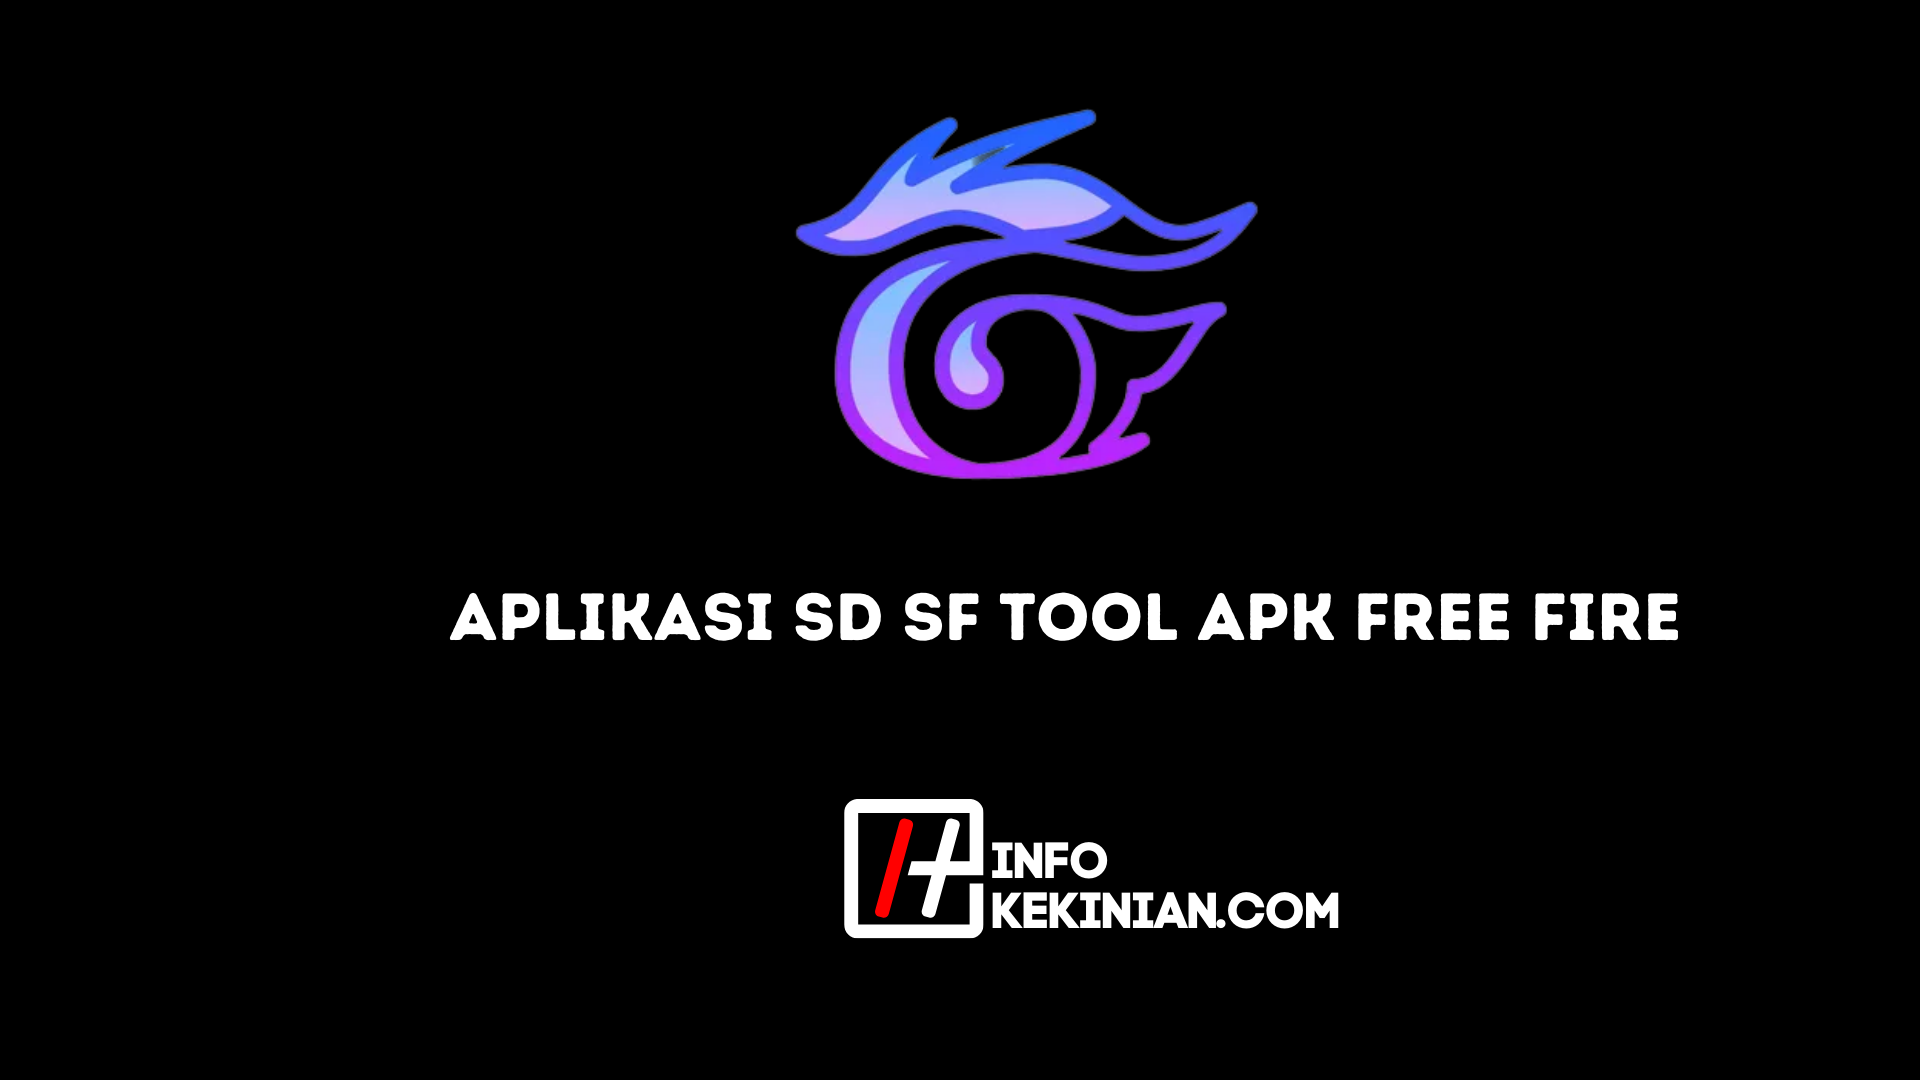 SD SF Tool Apk Free Fire application